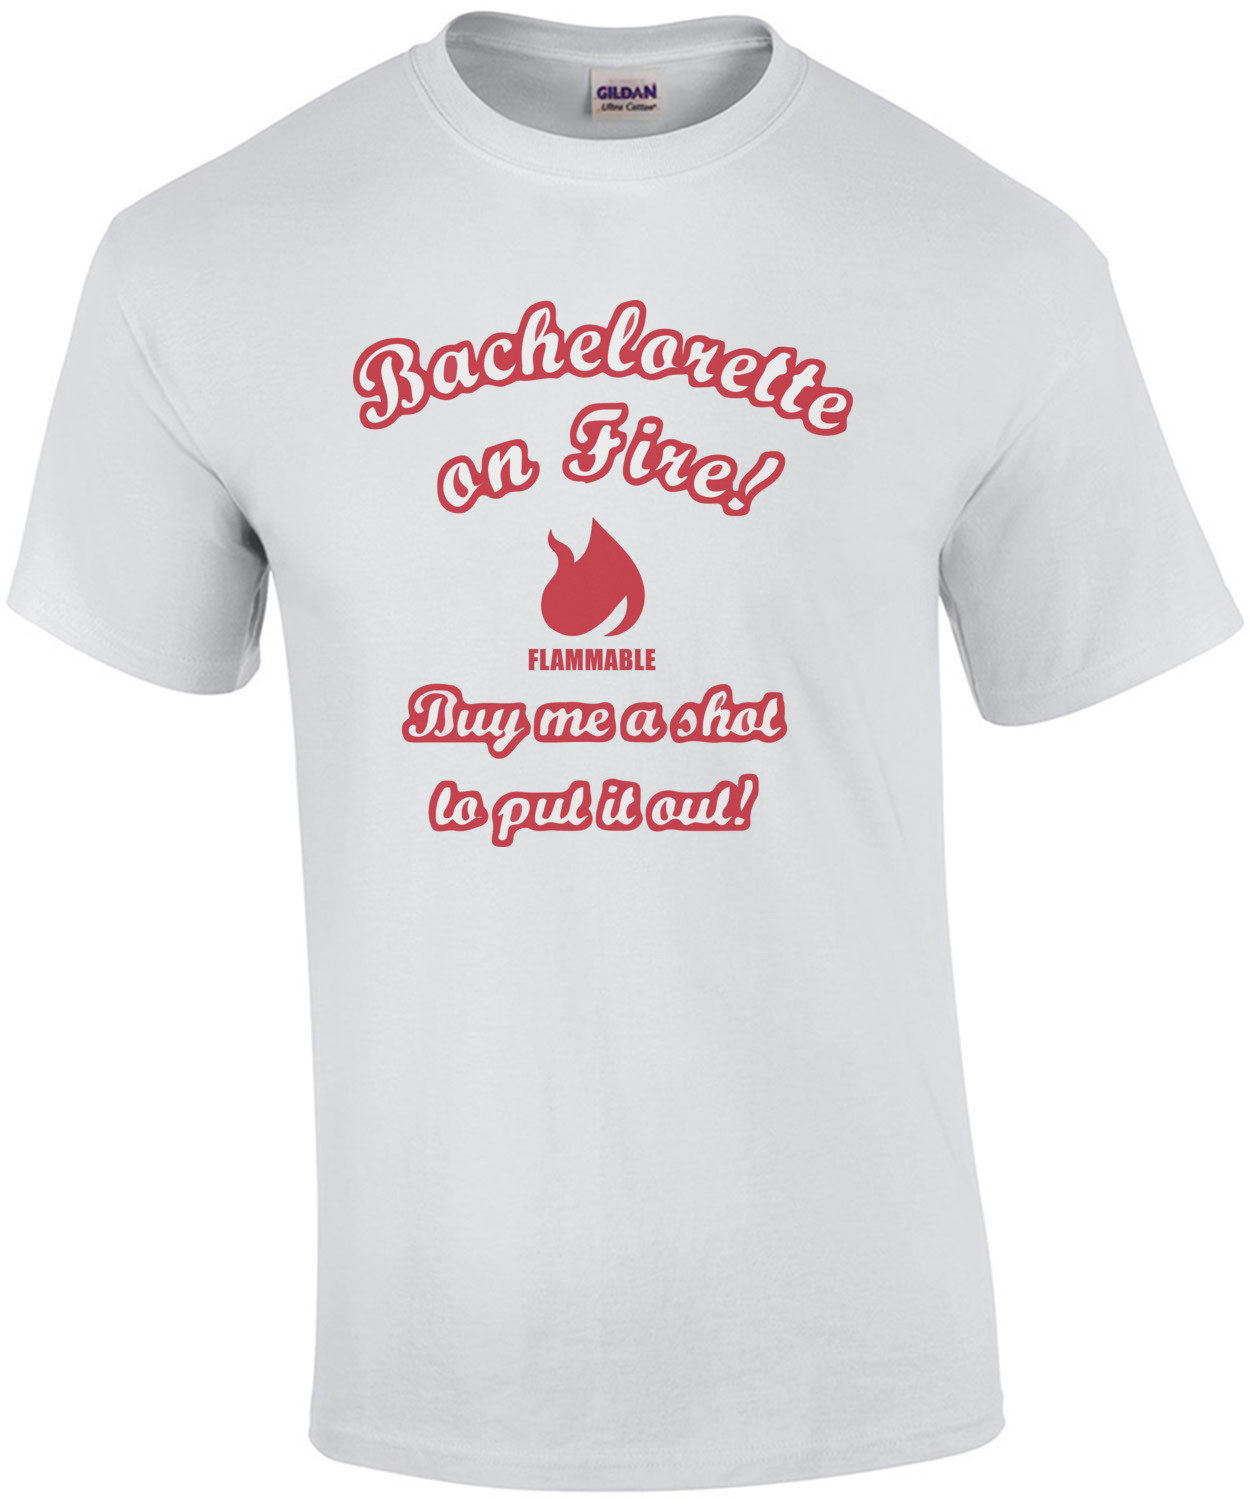 Bachelorette On Fire! Buy me a shot to put it out! Bachelorette T-Shirt